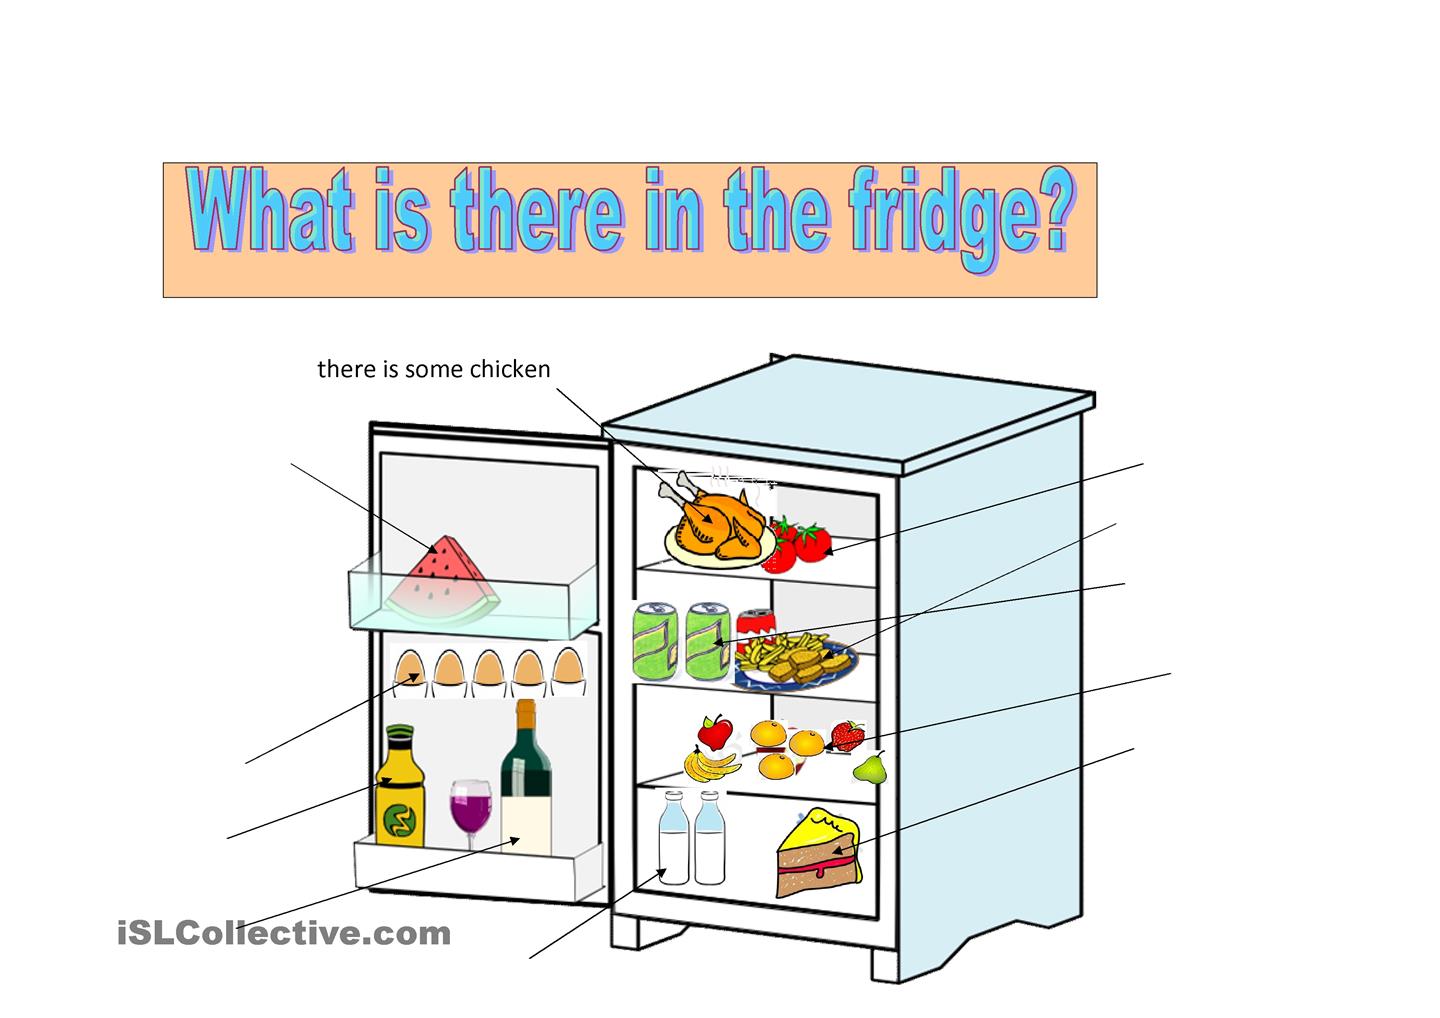 Is there some juice on the table. Холодильник с продуктами для английского языка. Холодильник по английскому. Холодильник с продуктами для описания. Холодильник с едой на английском.